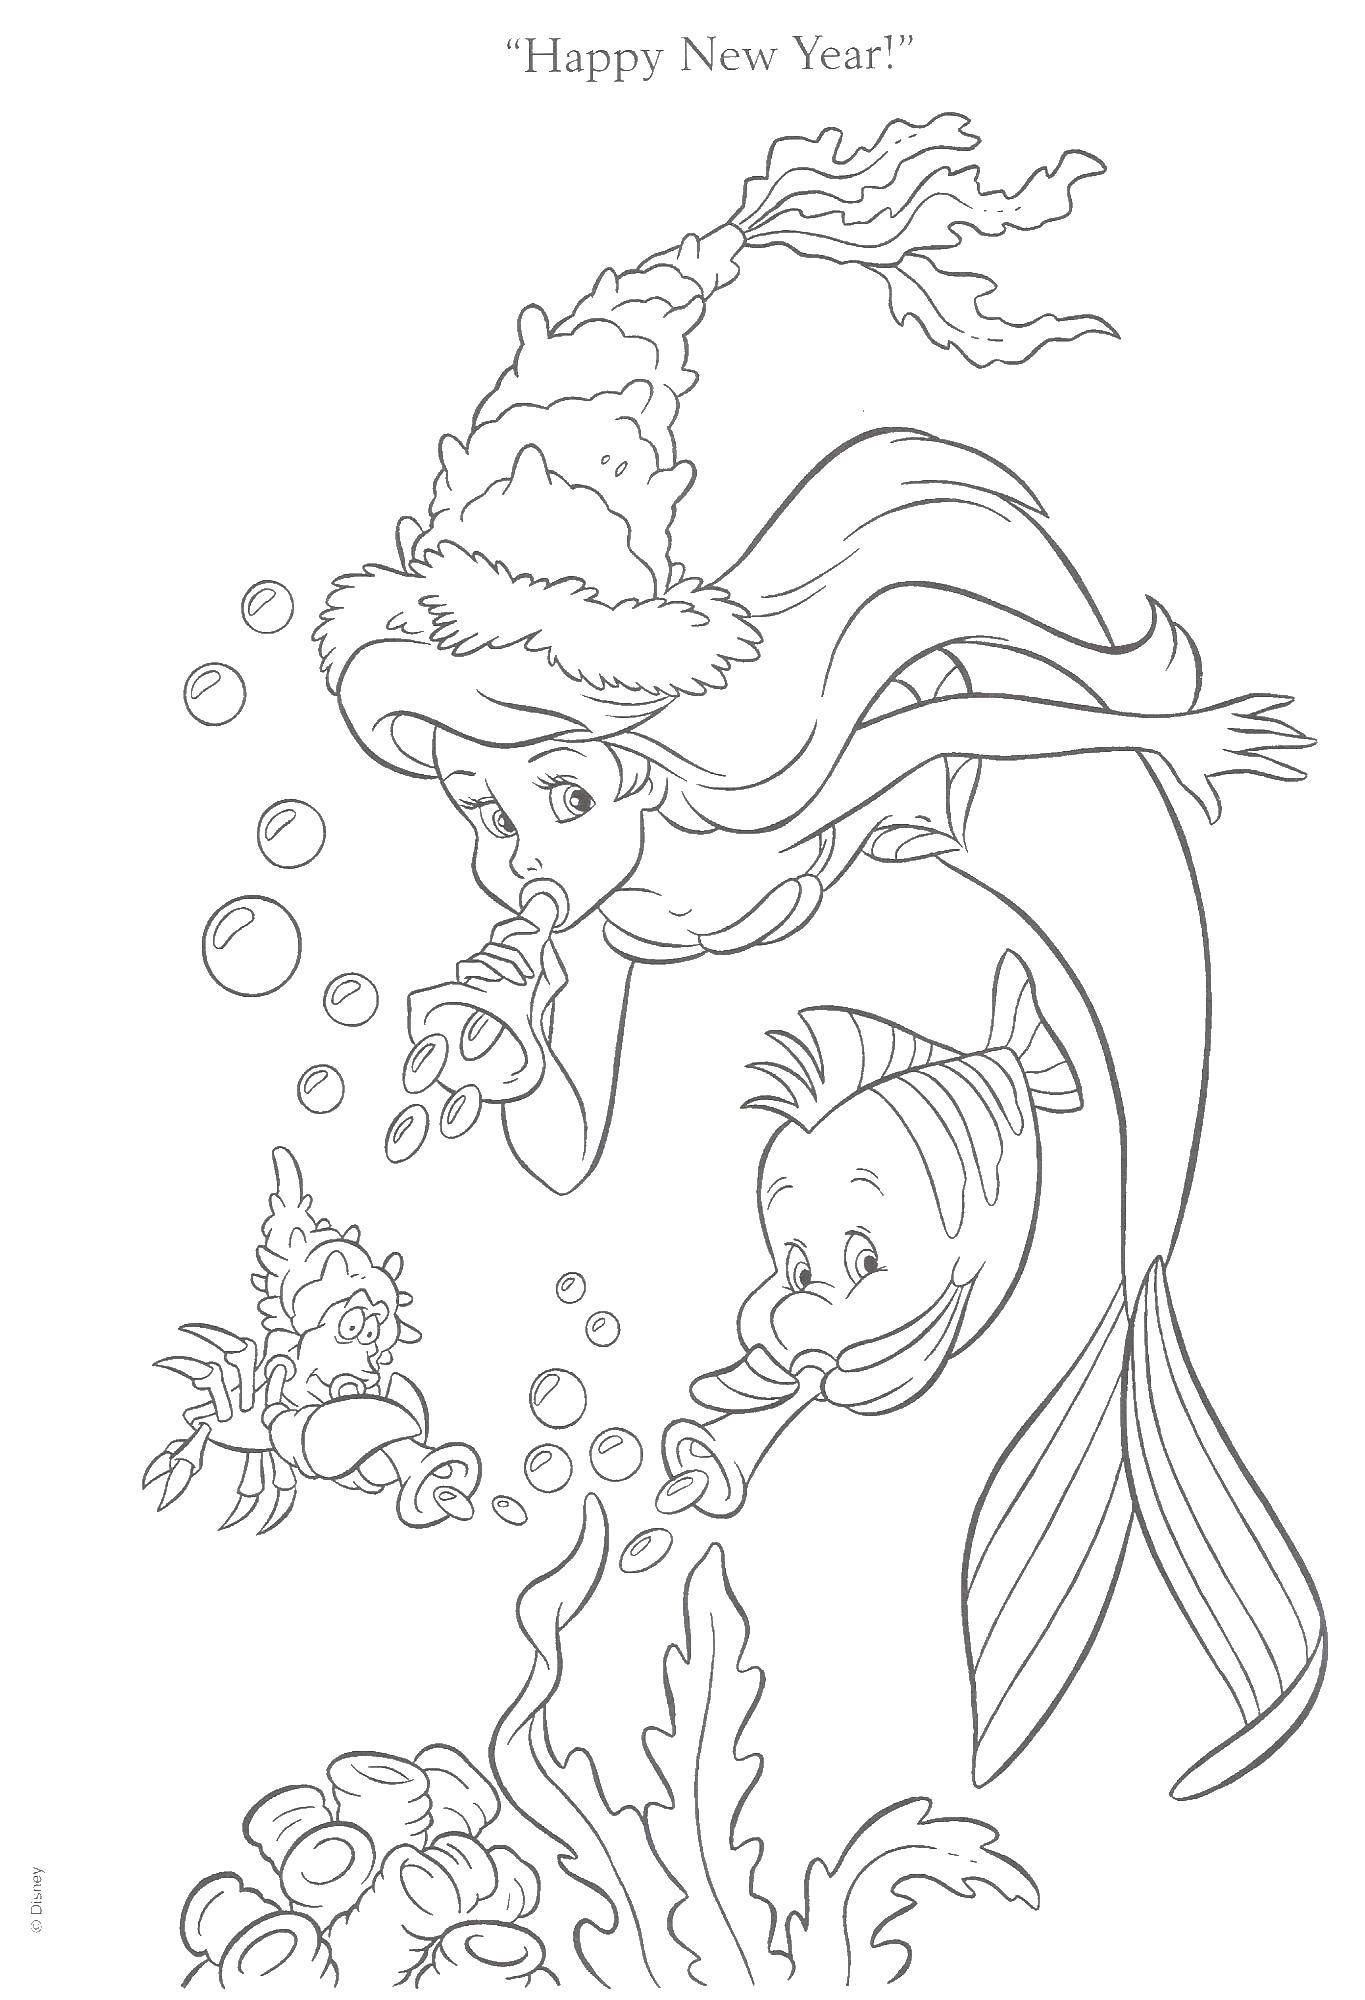 Название: Раскраска ариэль и рыбка. Категория: Русалочка. Теги: русалка, девушка, море, Ариэль, рыбка.